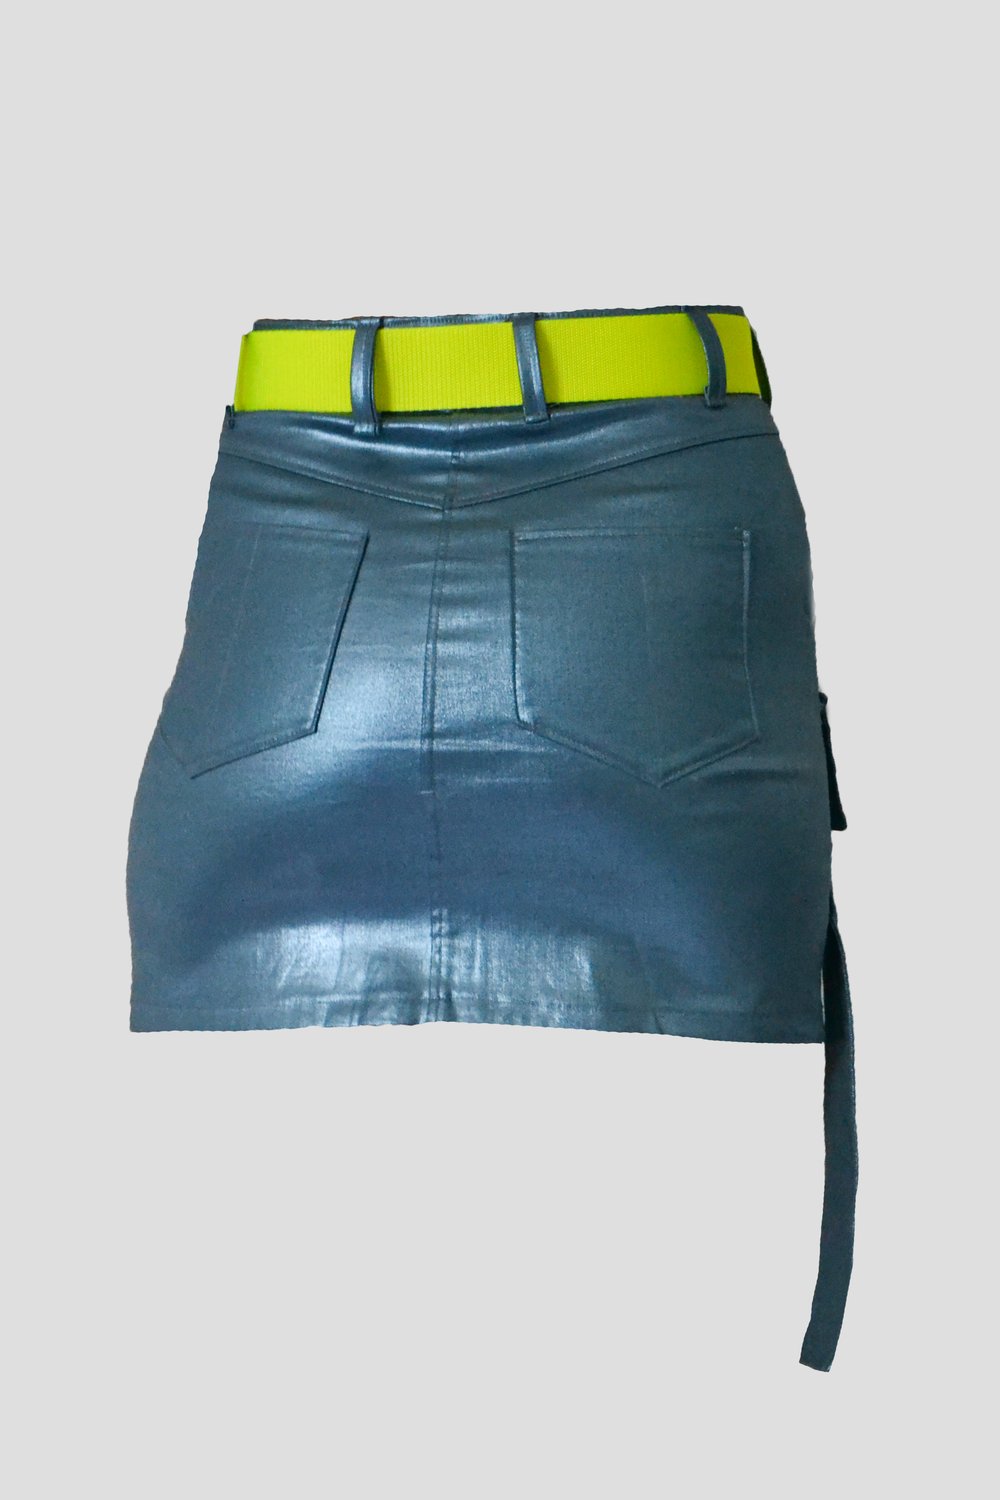 Image of Blue Metalic skirt